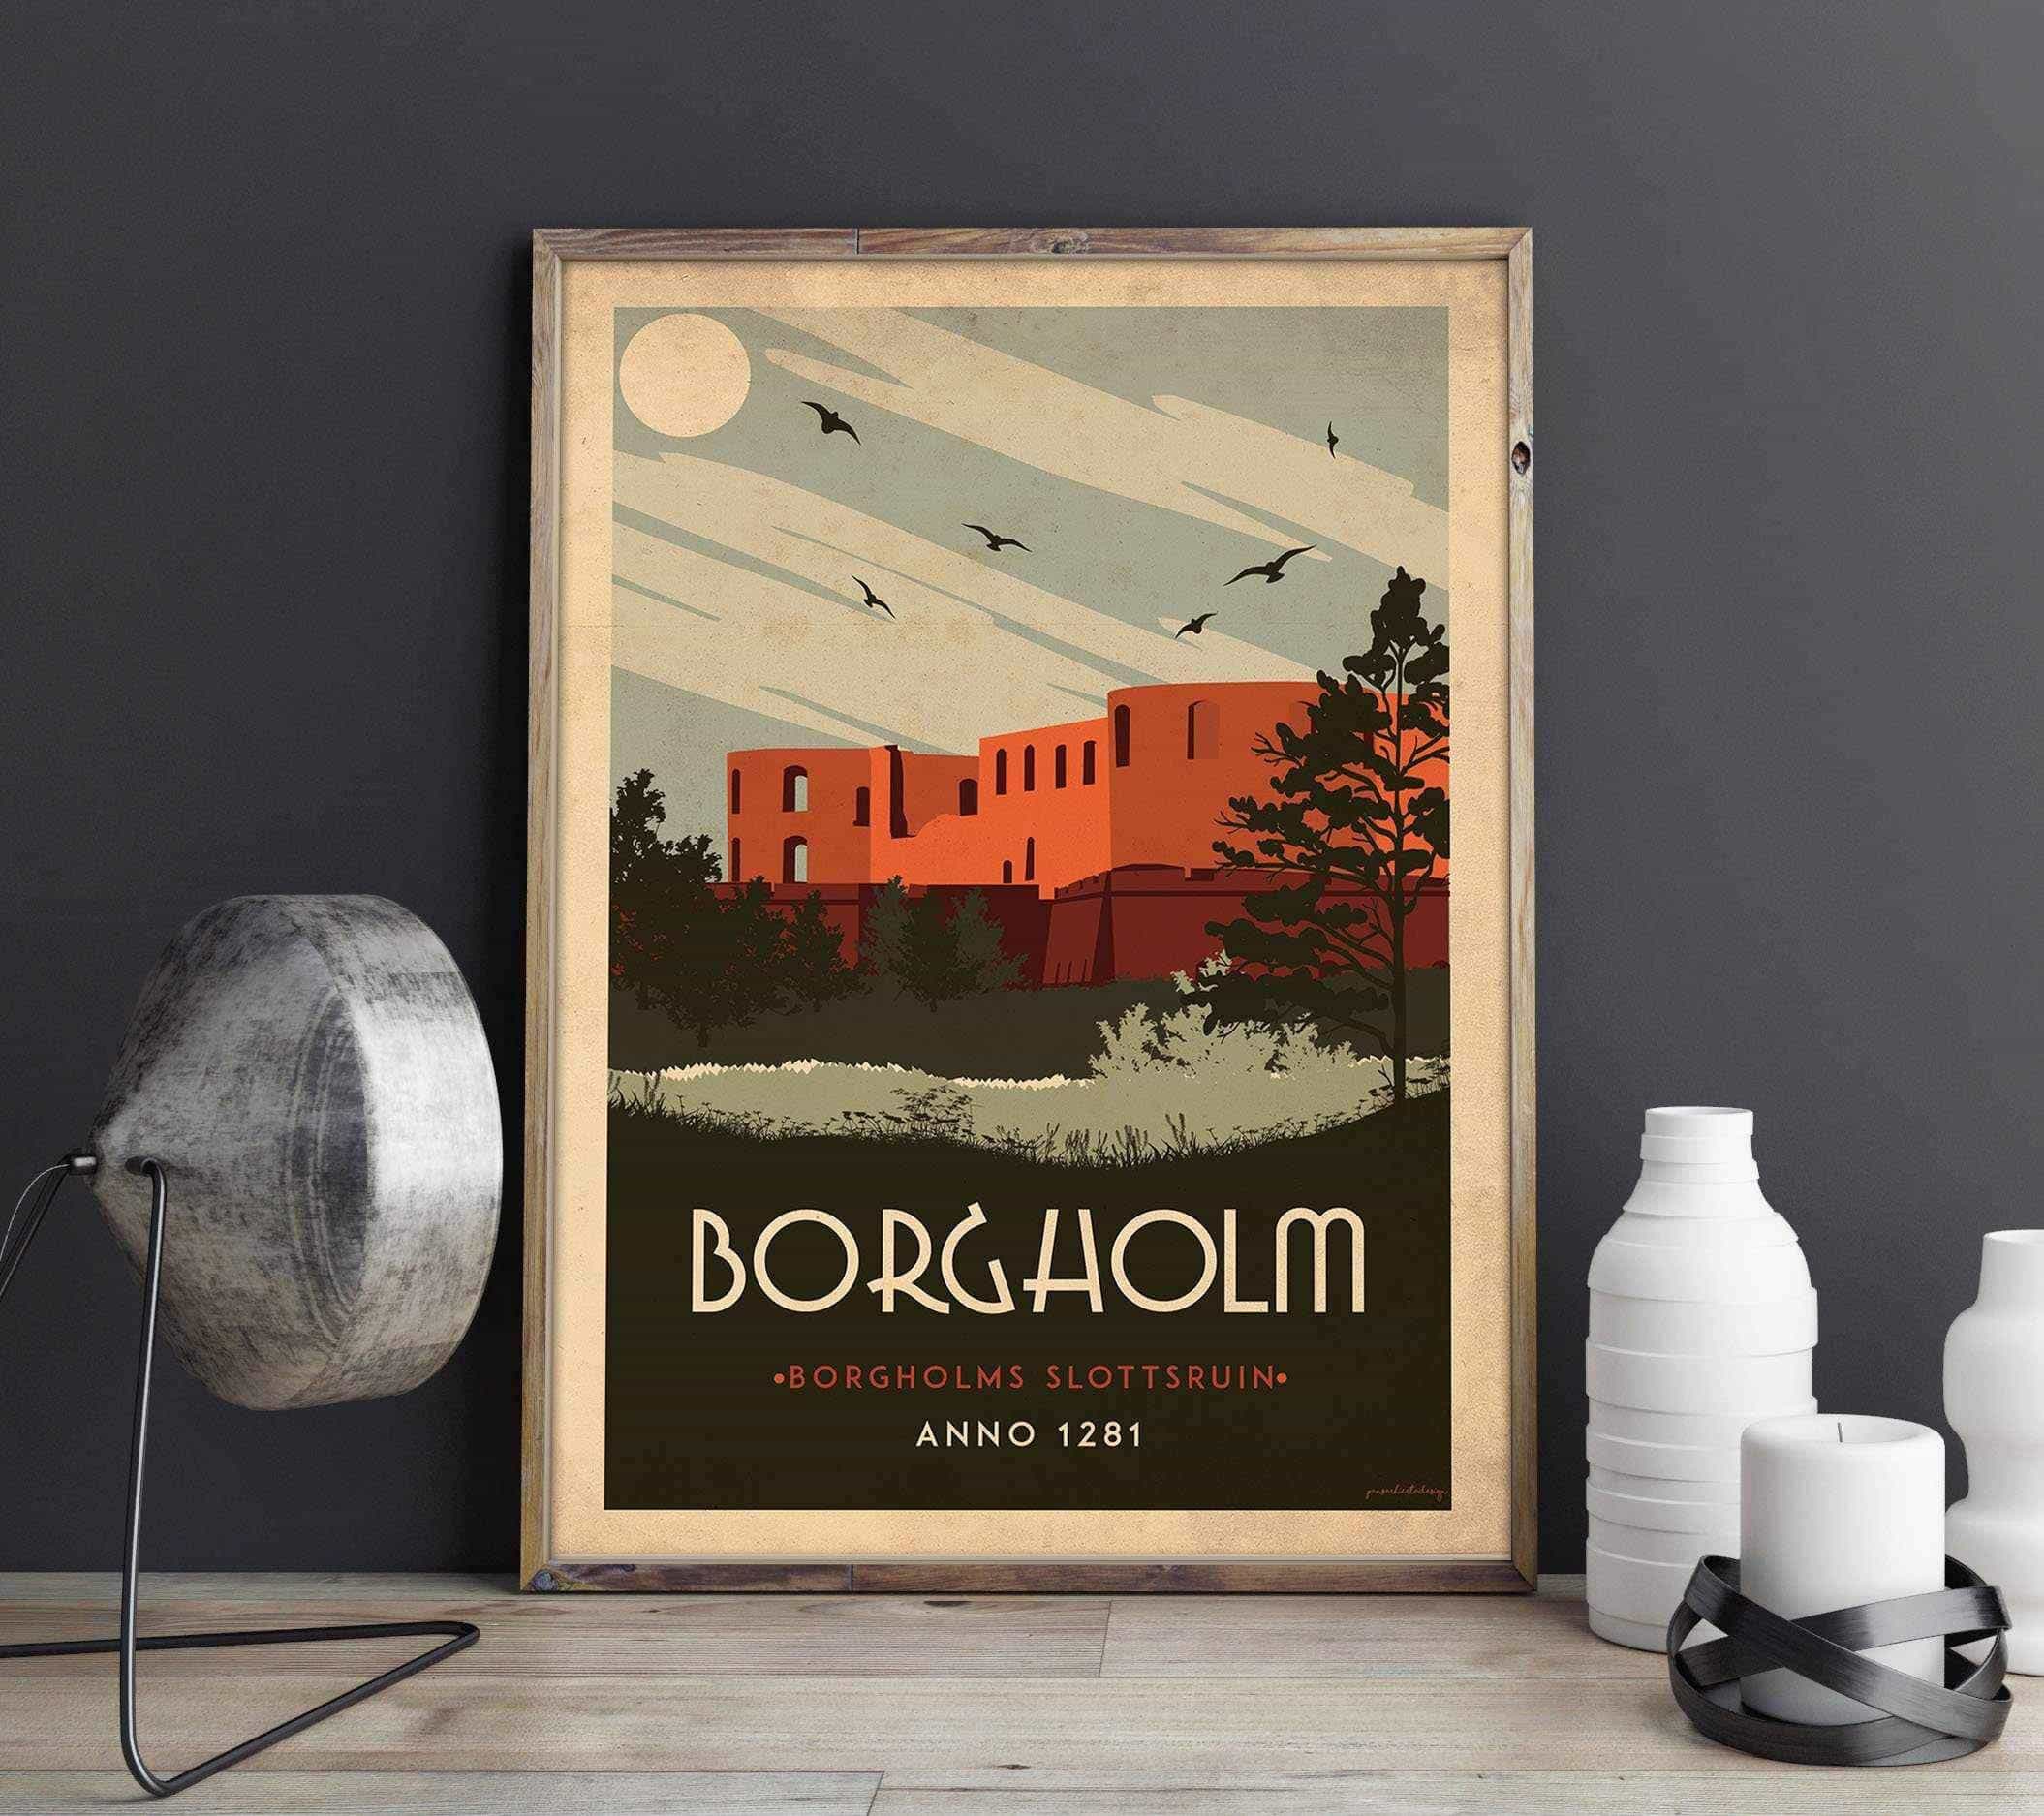 Borgholm - Art deco Posters, affischer, tavlor Pansarhiertadesign